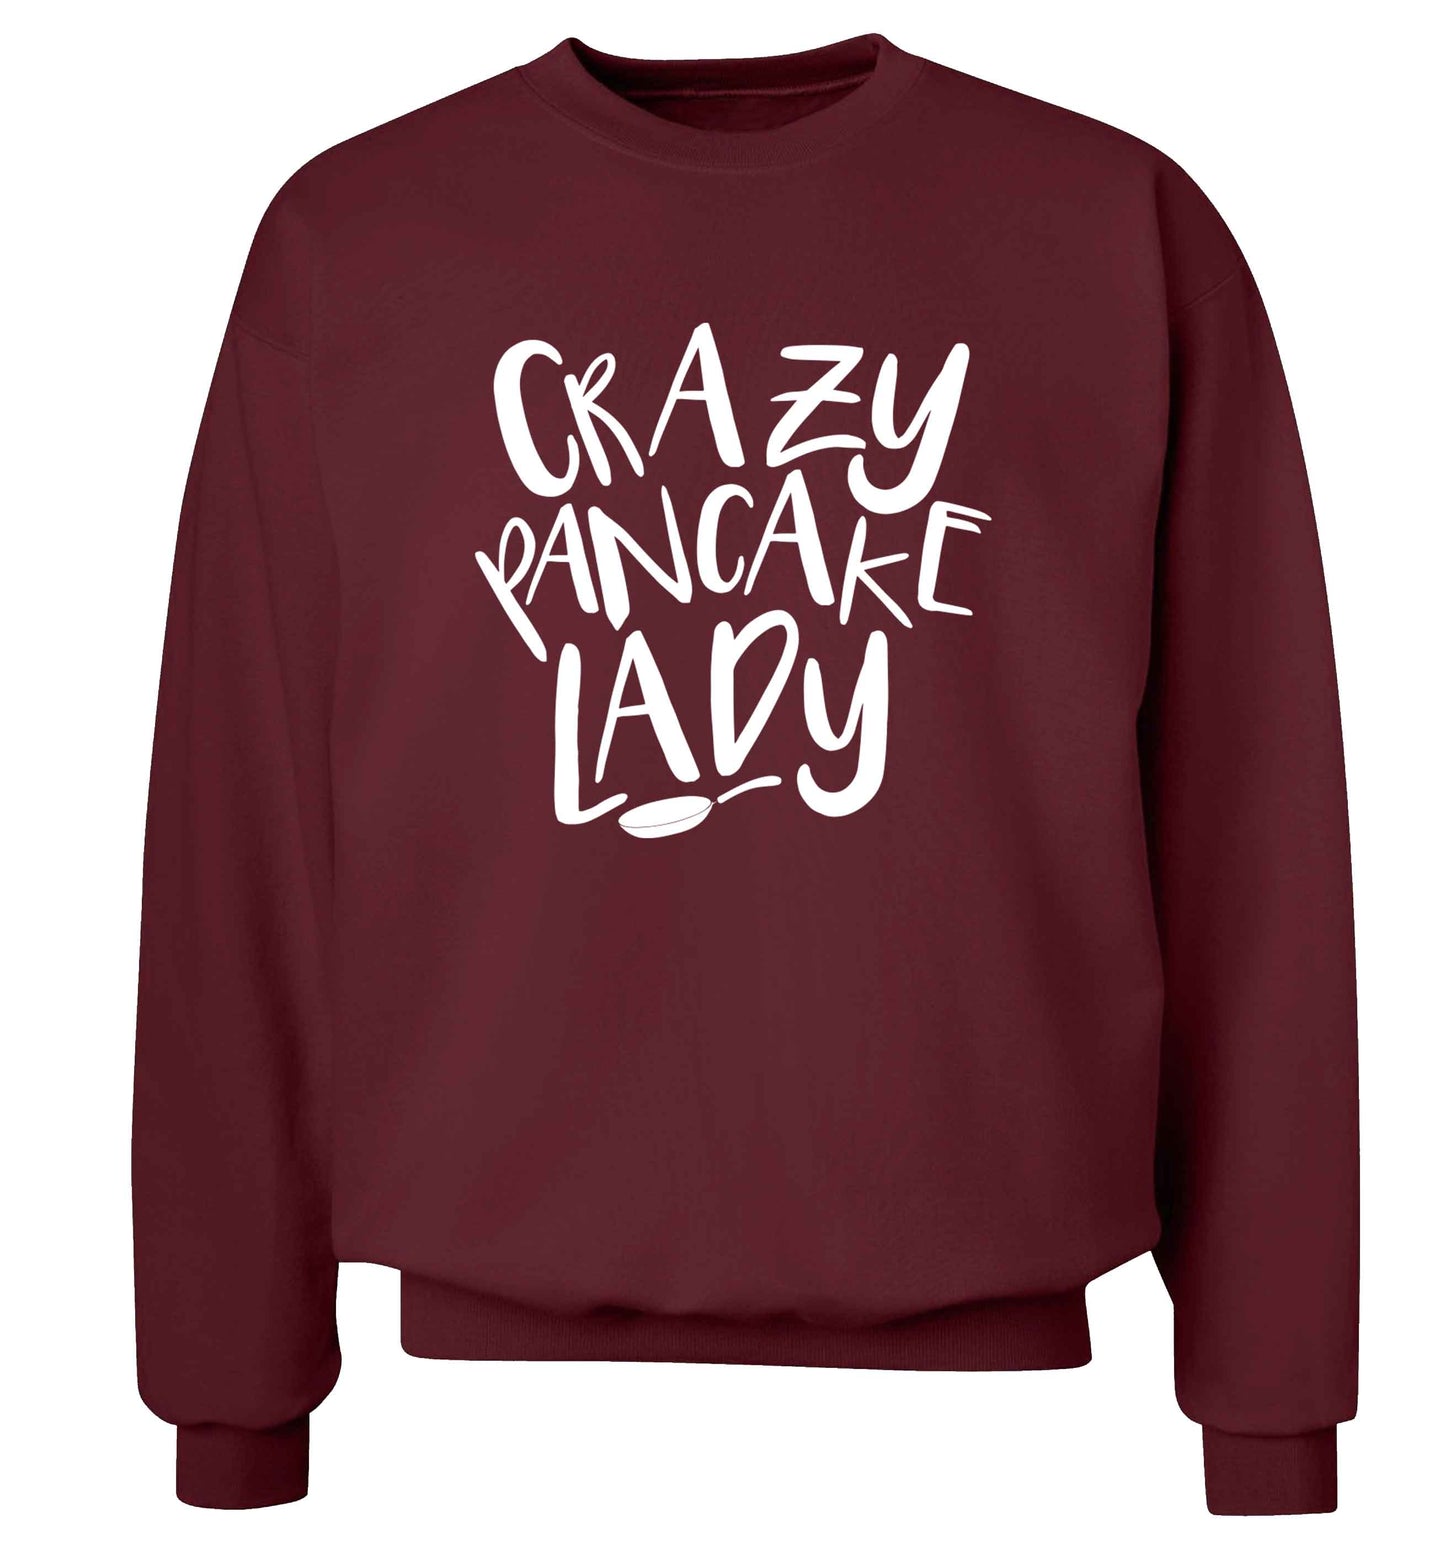 Crazy pancake lady adult's unisex maroon sweater 2XL